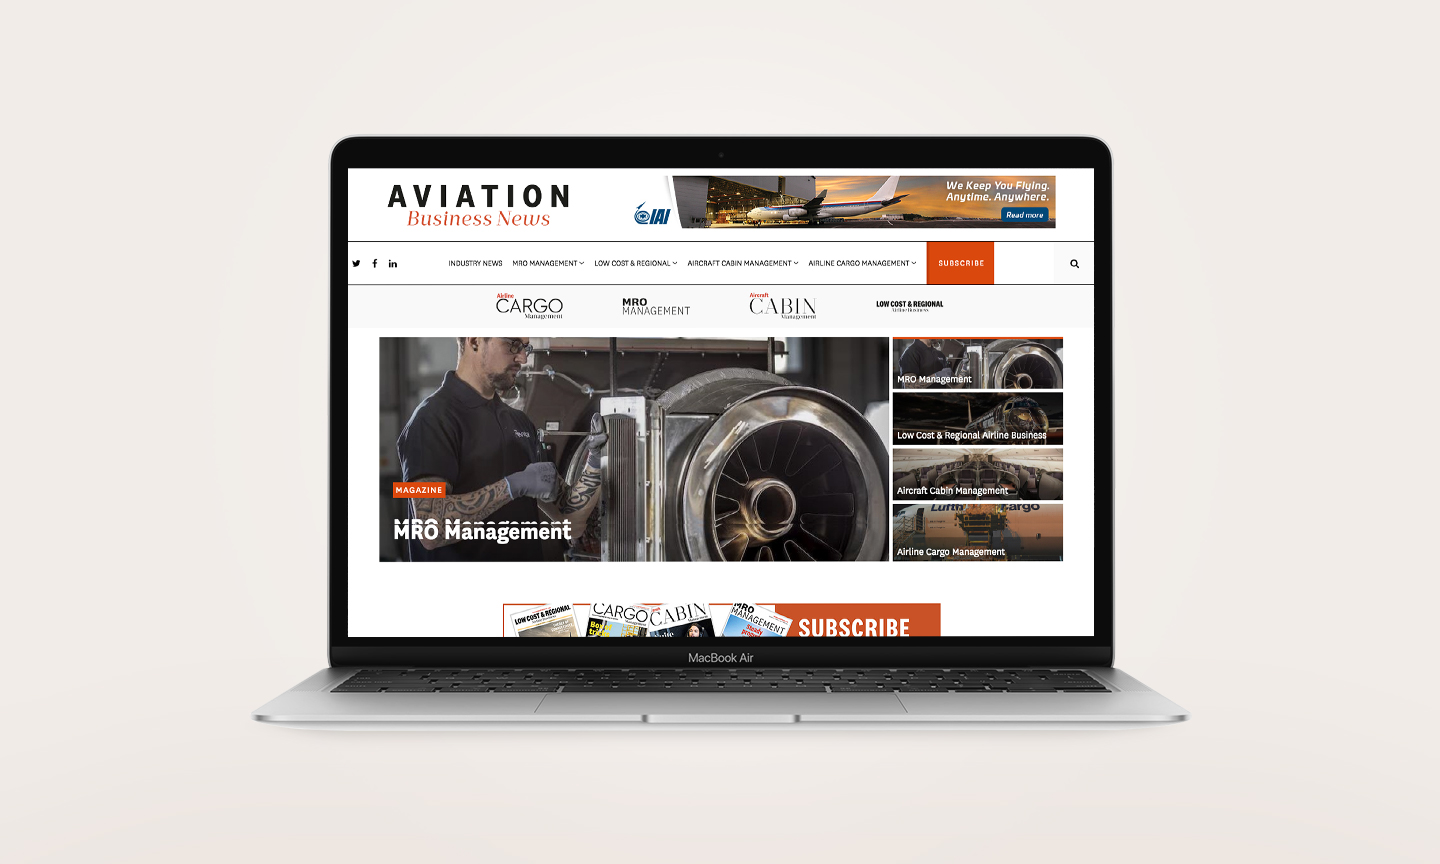 Aviation Business News